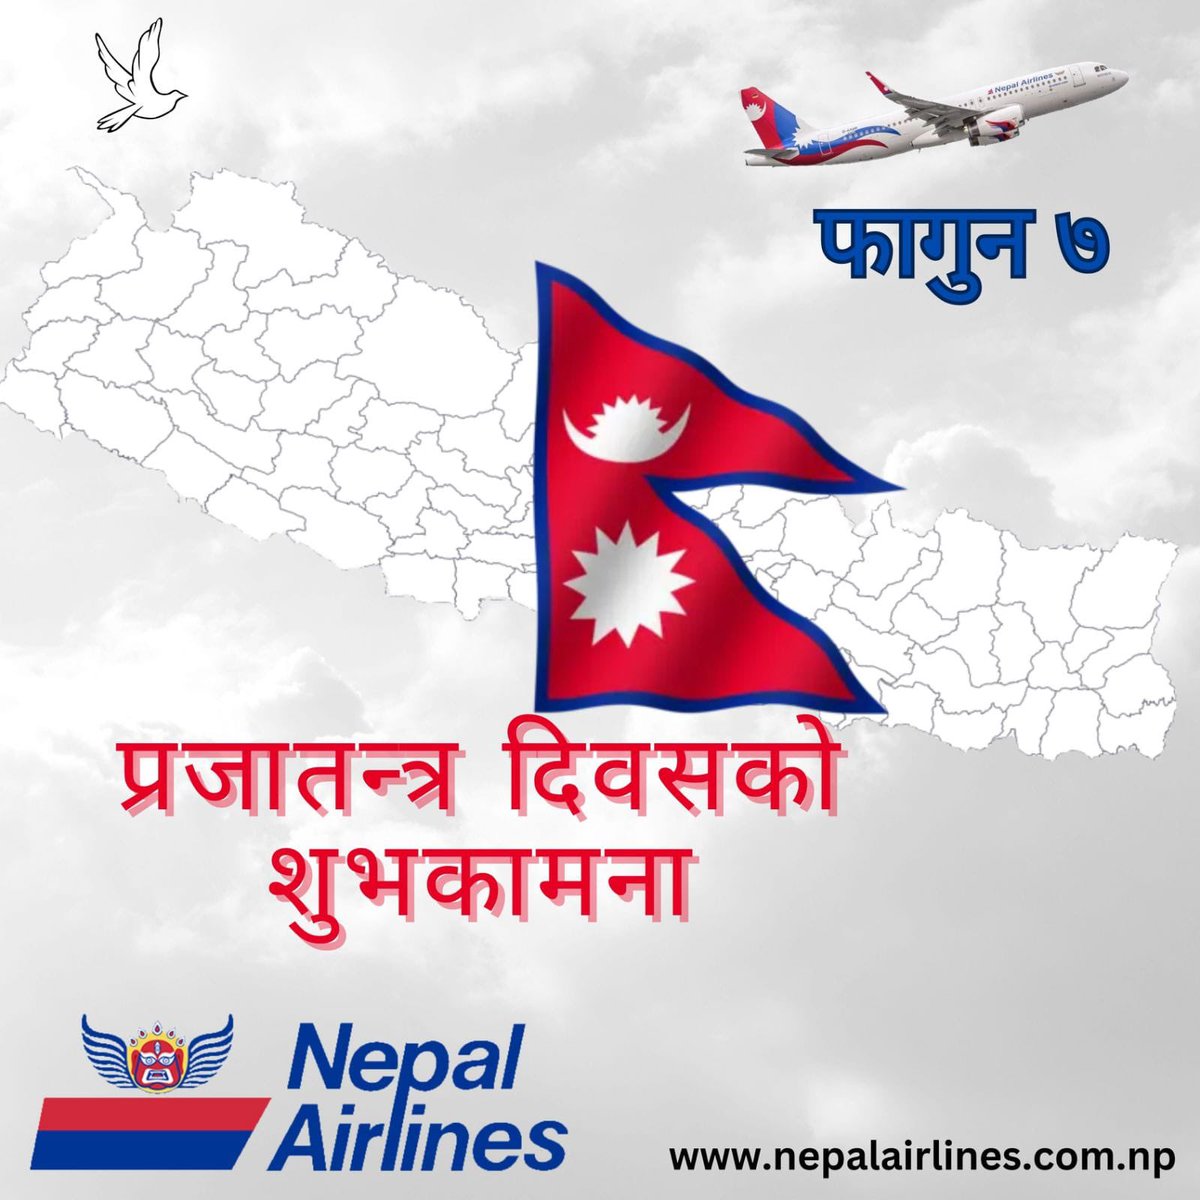 प्रजातन्र दिवसको शुभकामना #NepalAirlinesRA